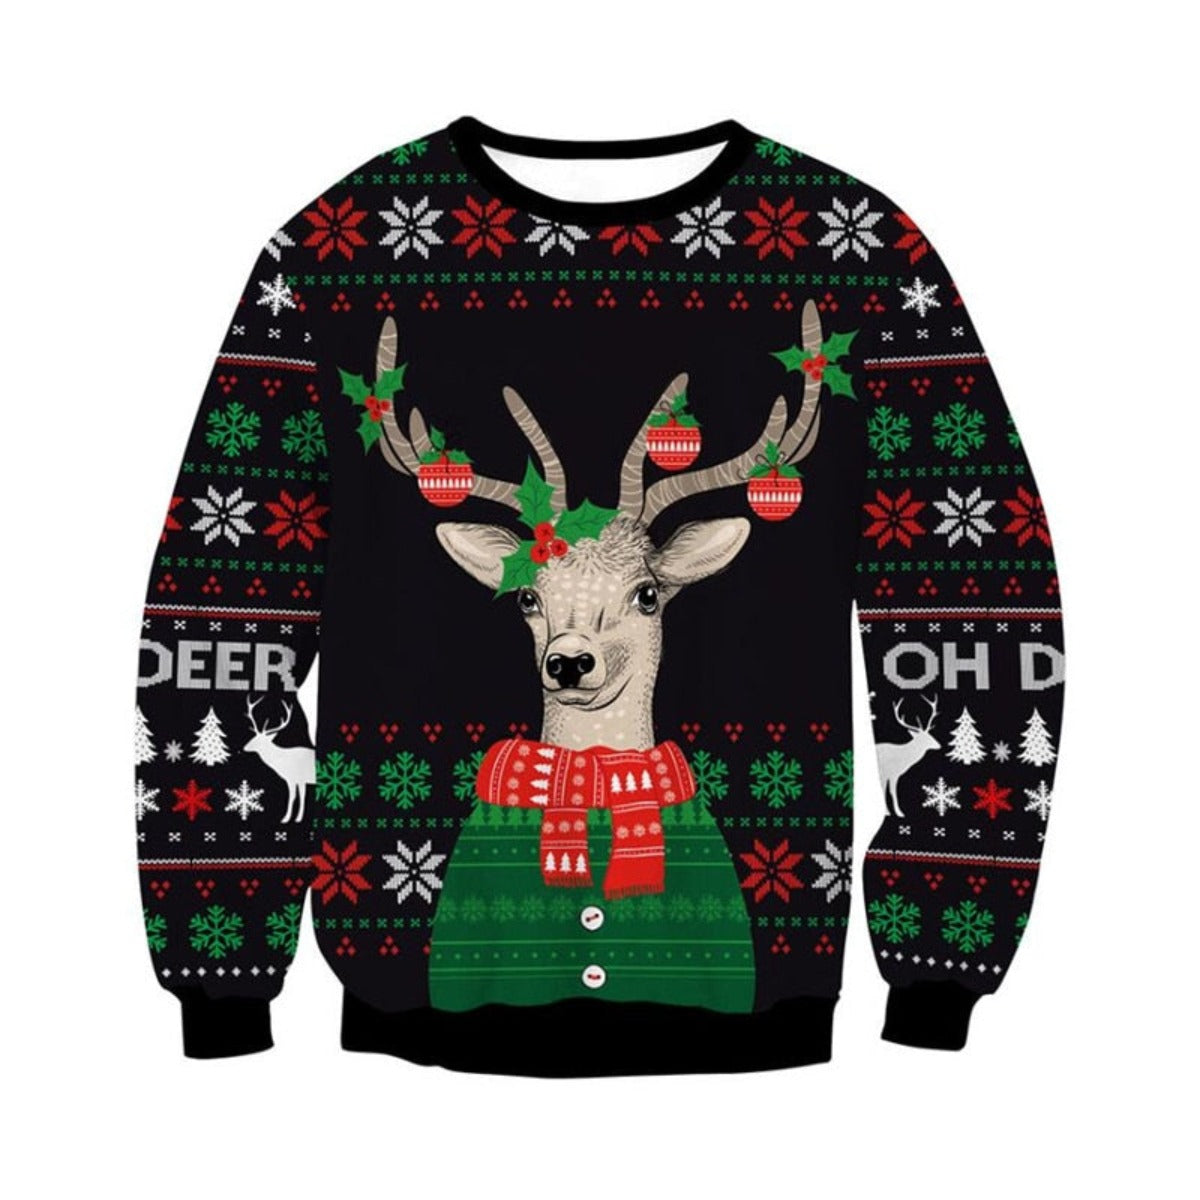 Oh Deer Ugly Christmas Sweater